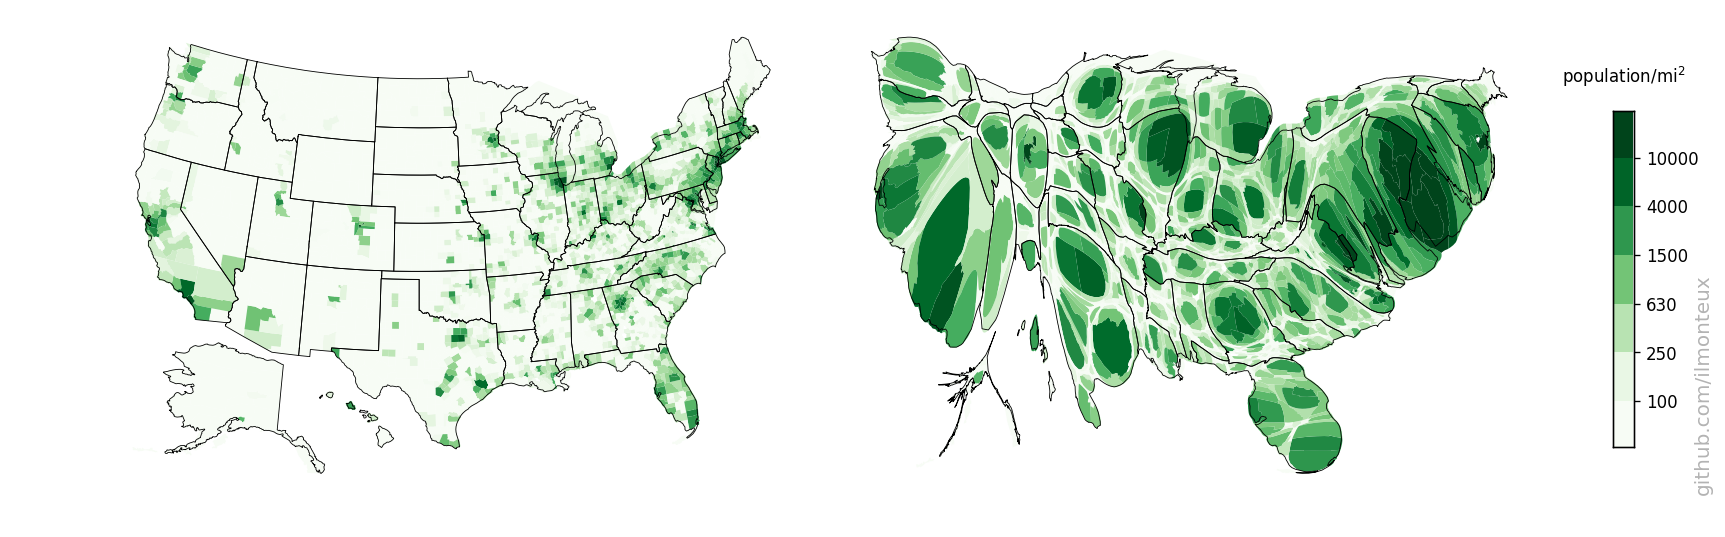 US population density